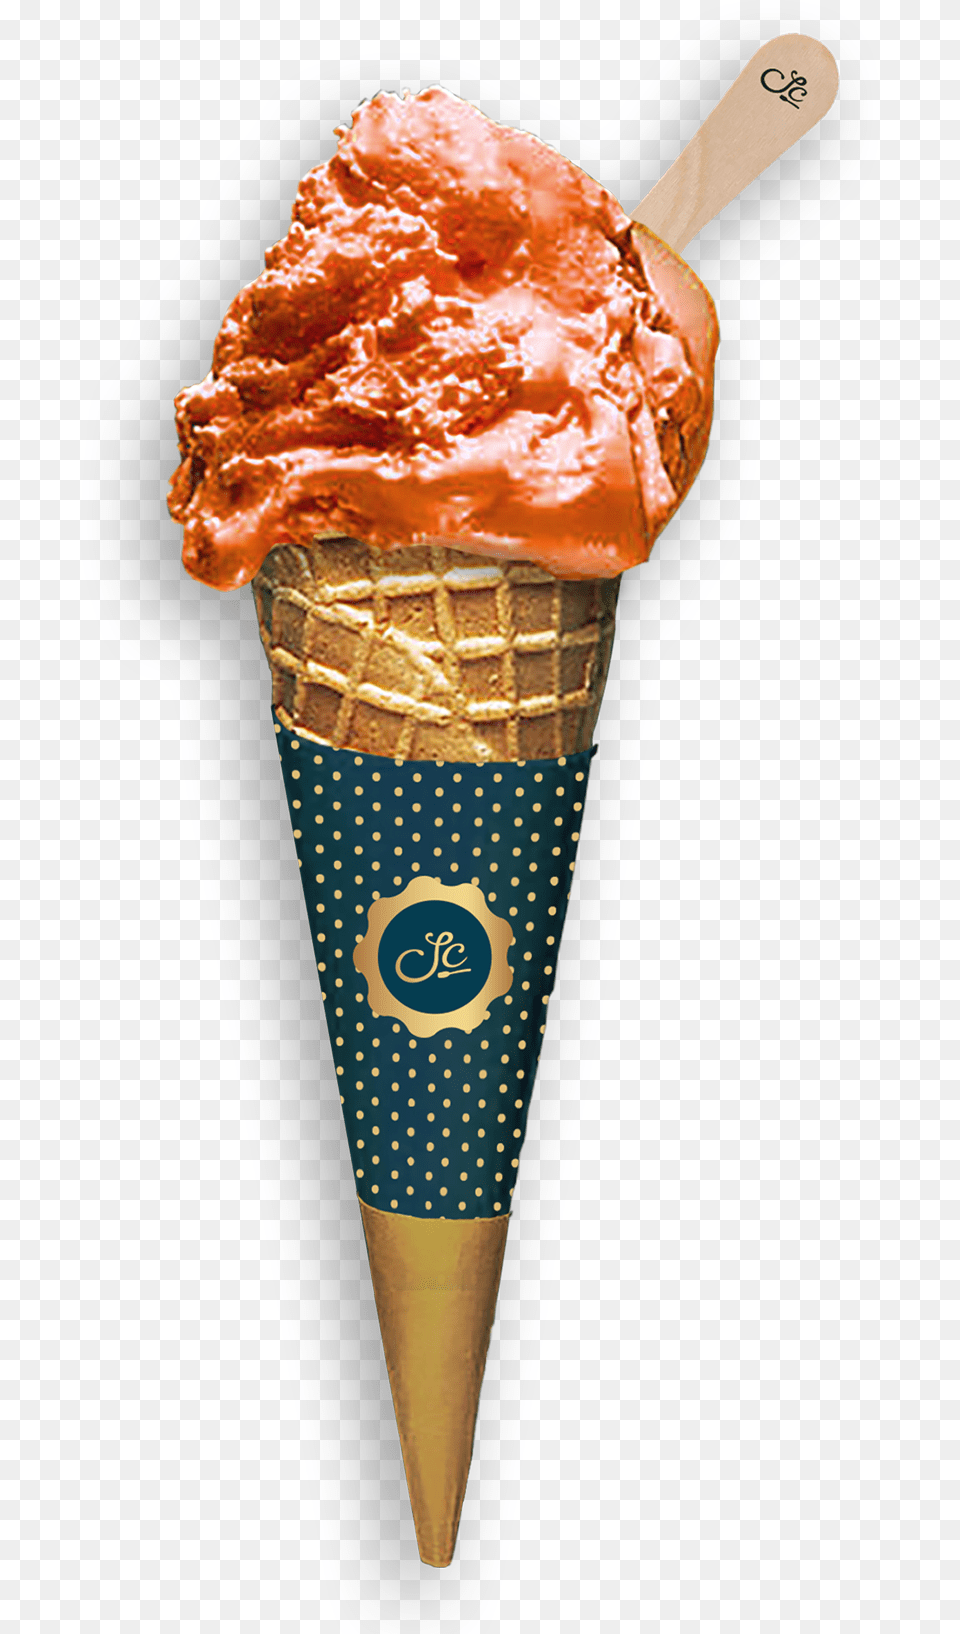 We Eat Gelato Ice Cream Cone, Dessert, Food, Ice Cream, Soft Serve Ice Cream Free Png Download